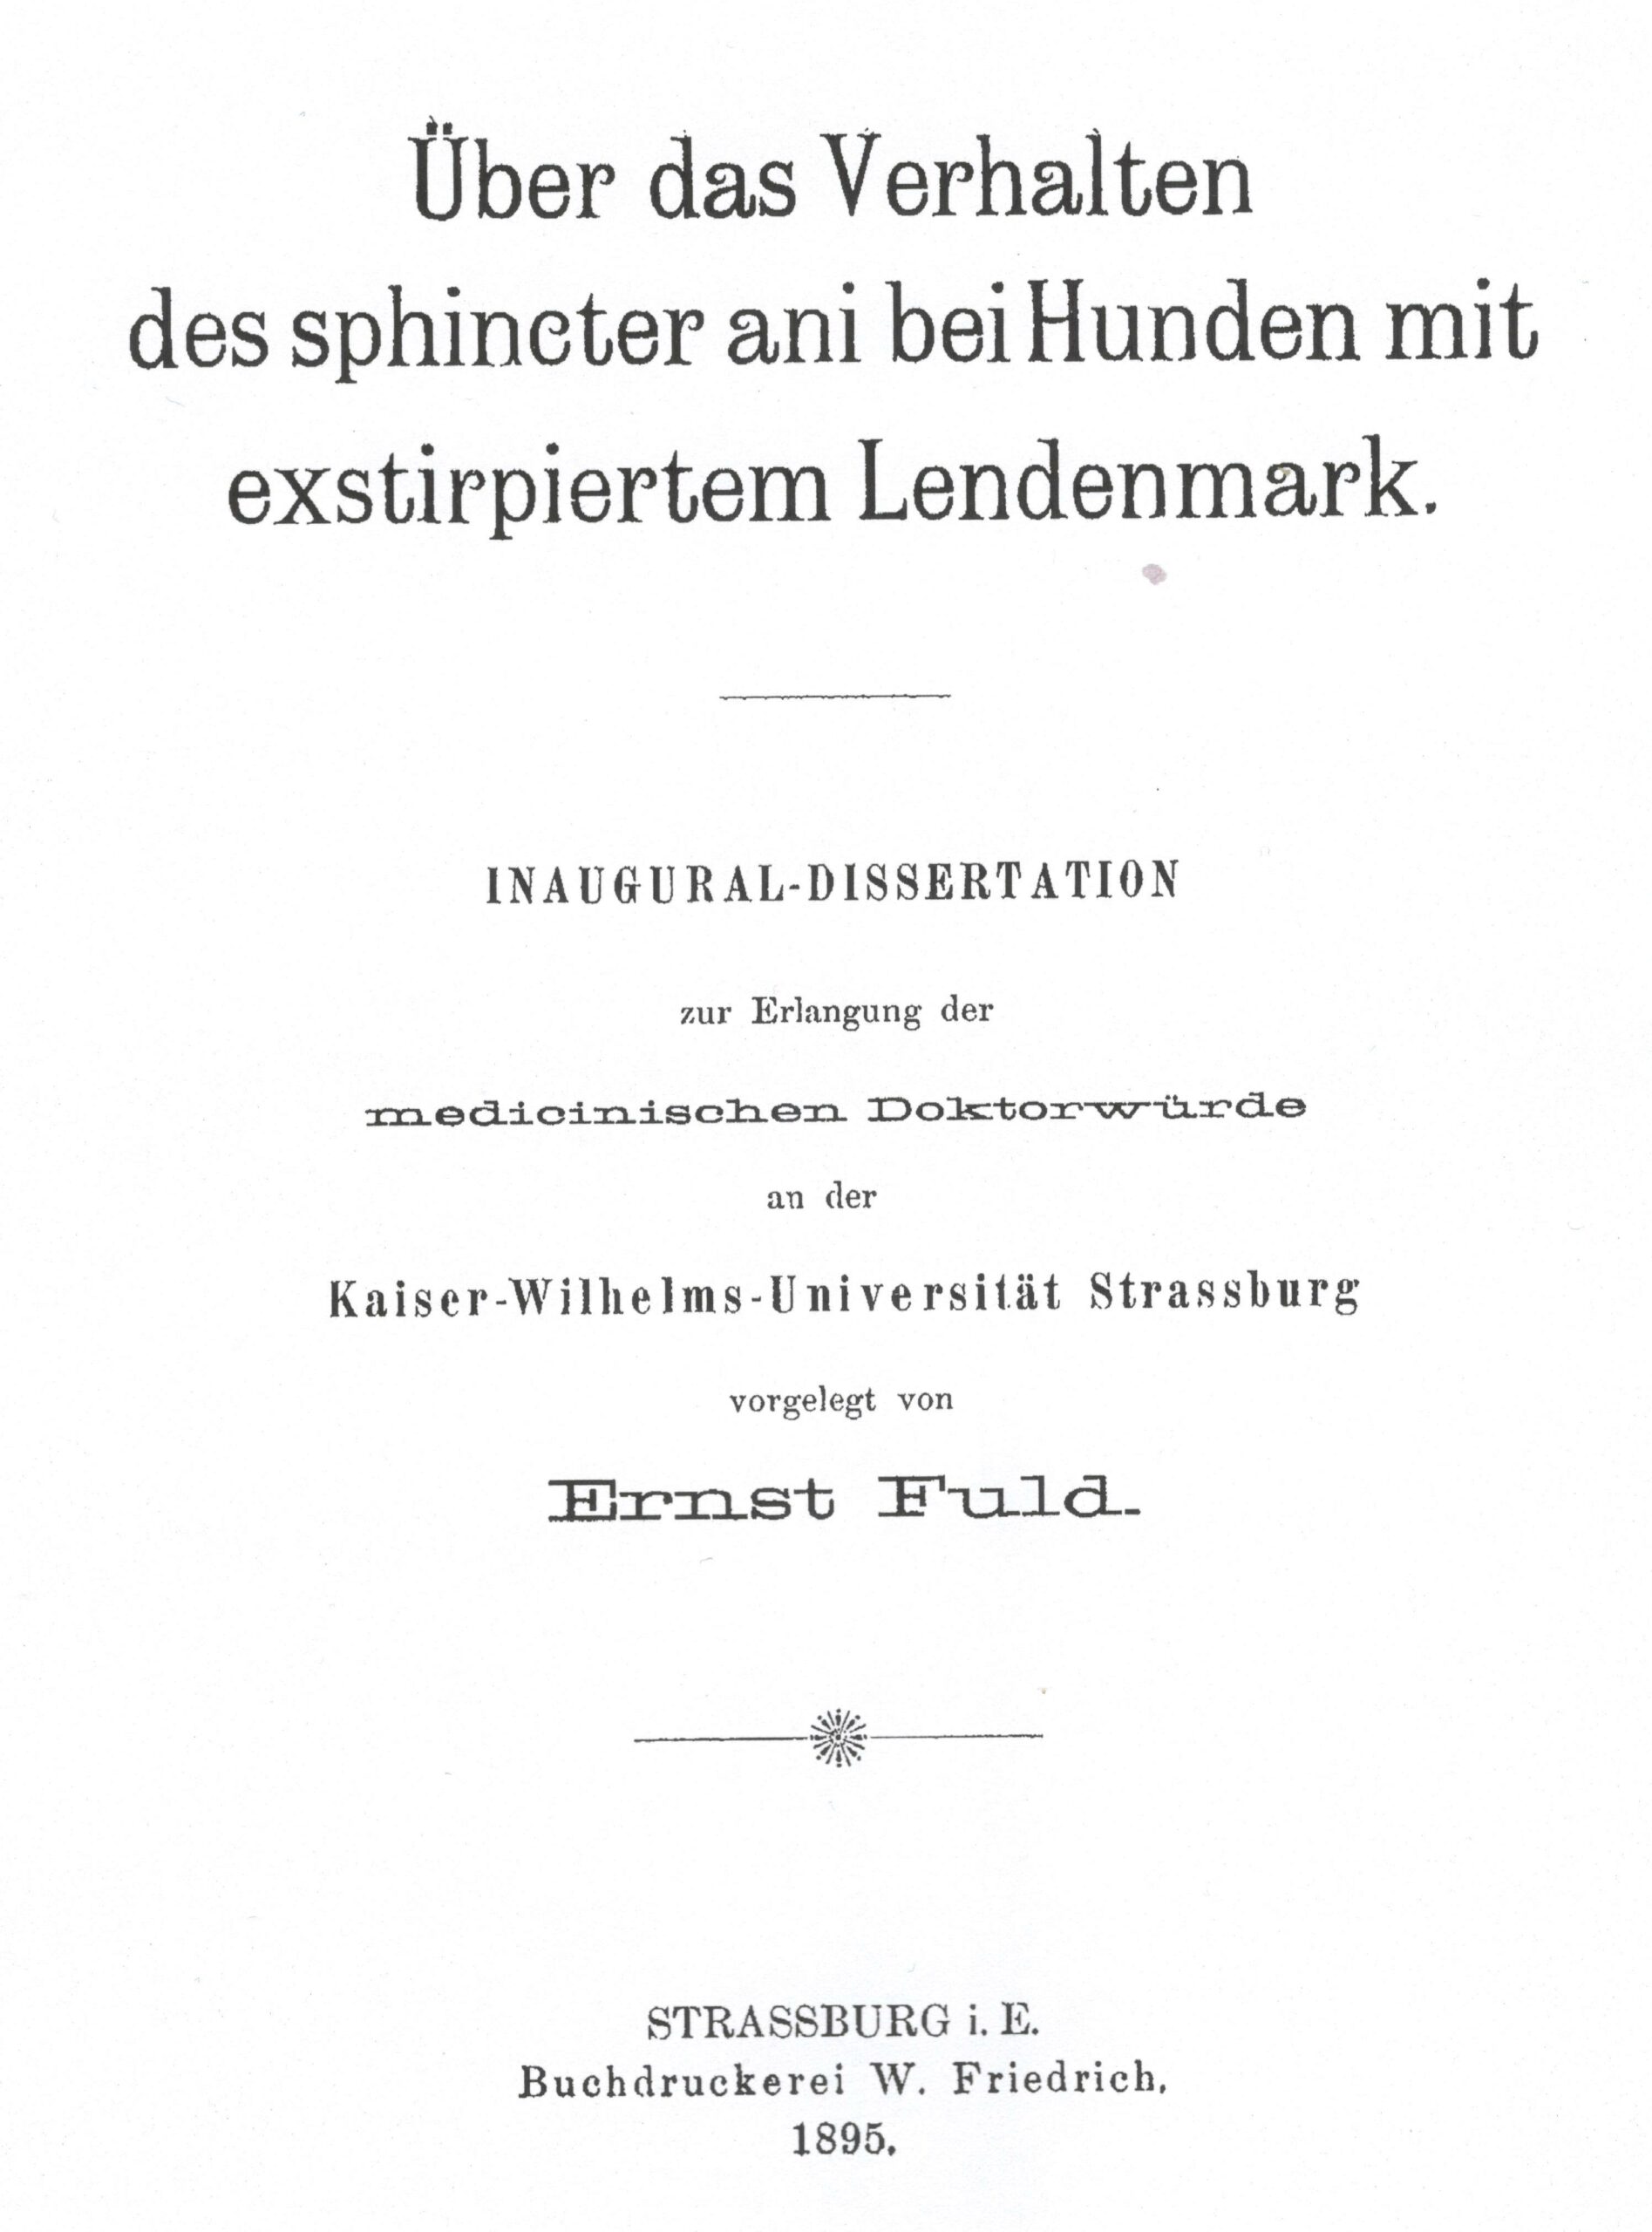 Dissertation, Straßburg 1895, Kopie des Titelblatts, Archiv H Je